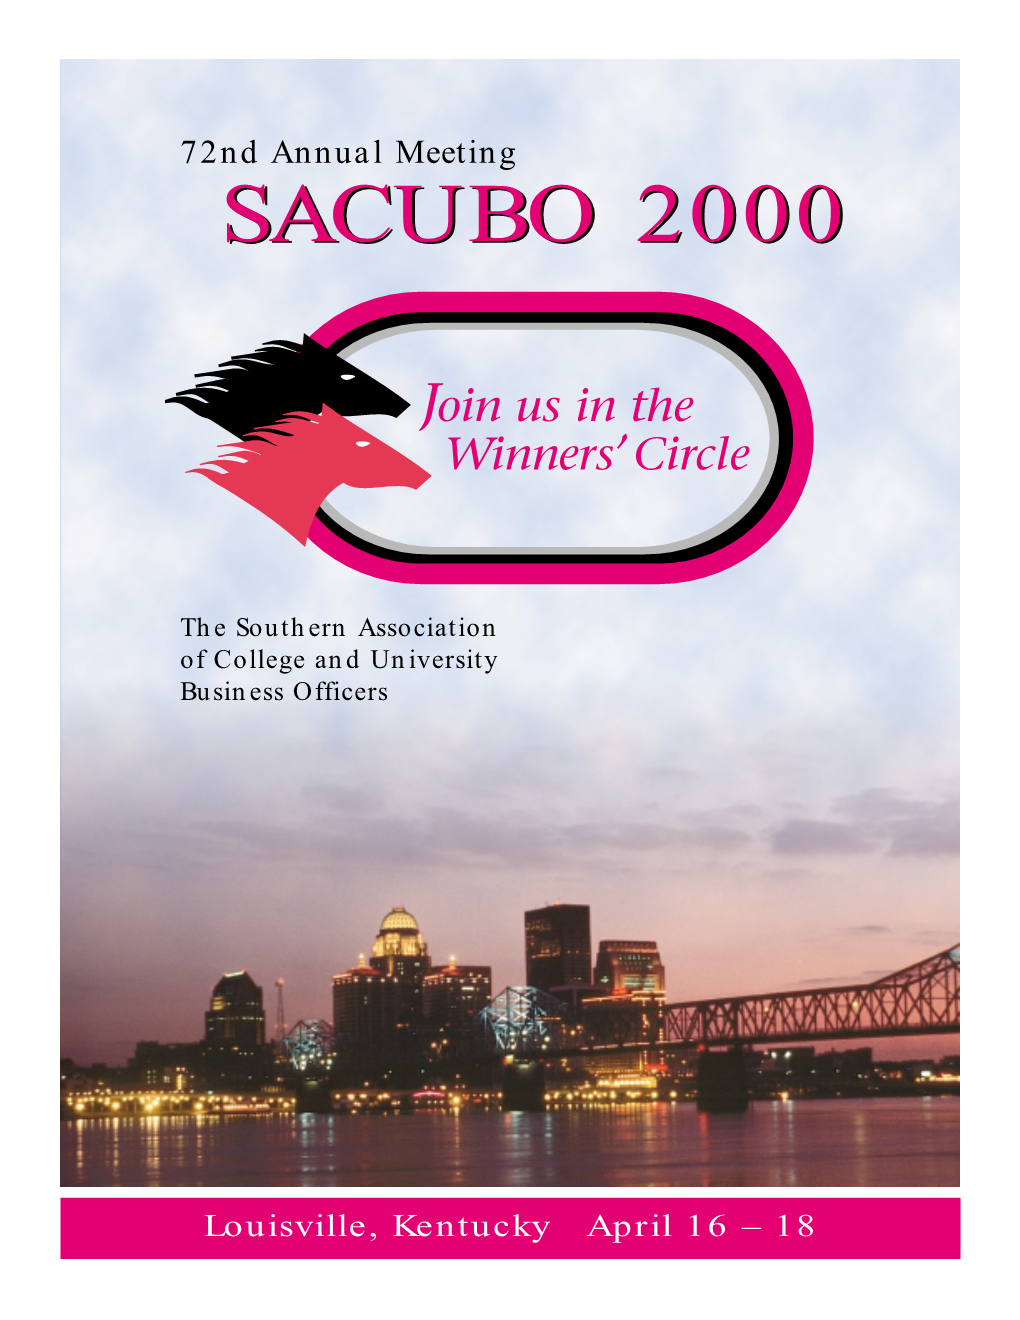 Sacubo 2000 Sacubo 2000